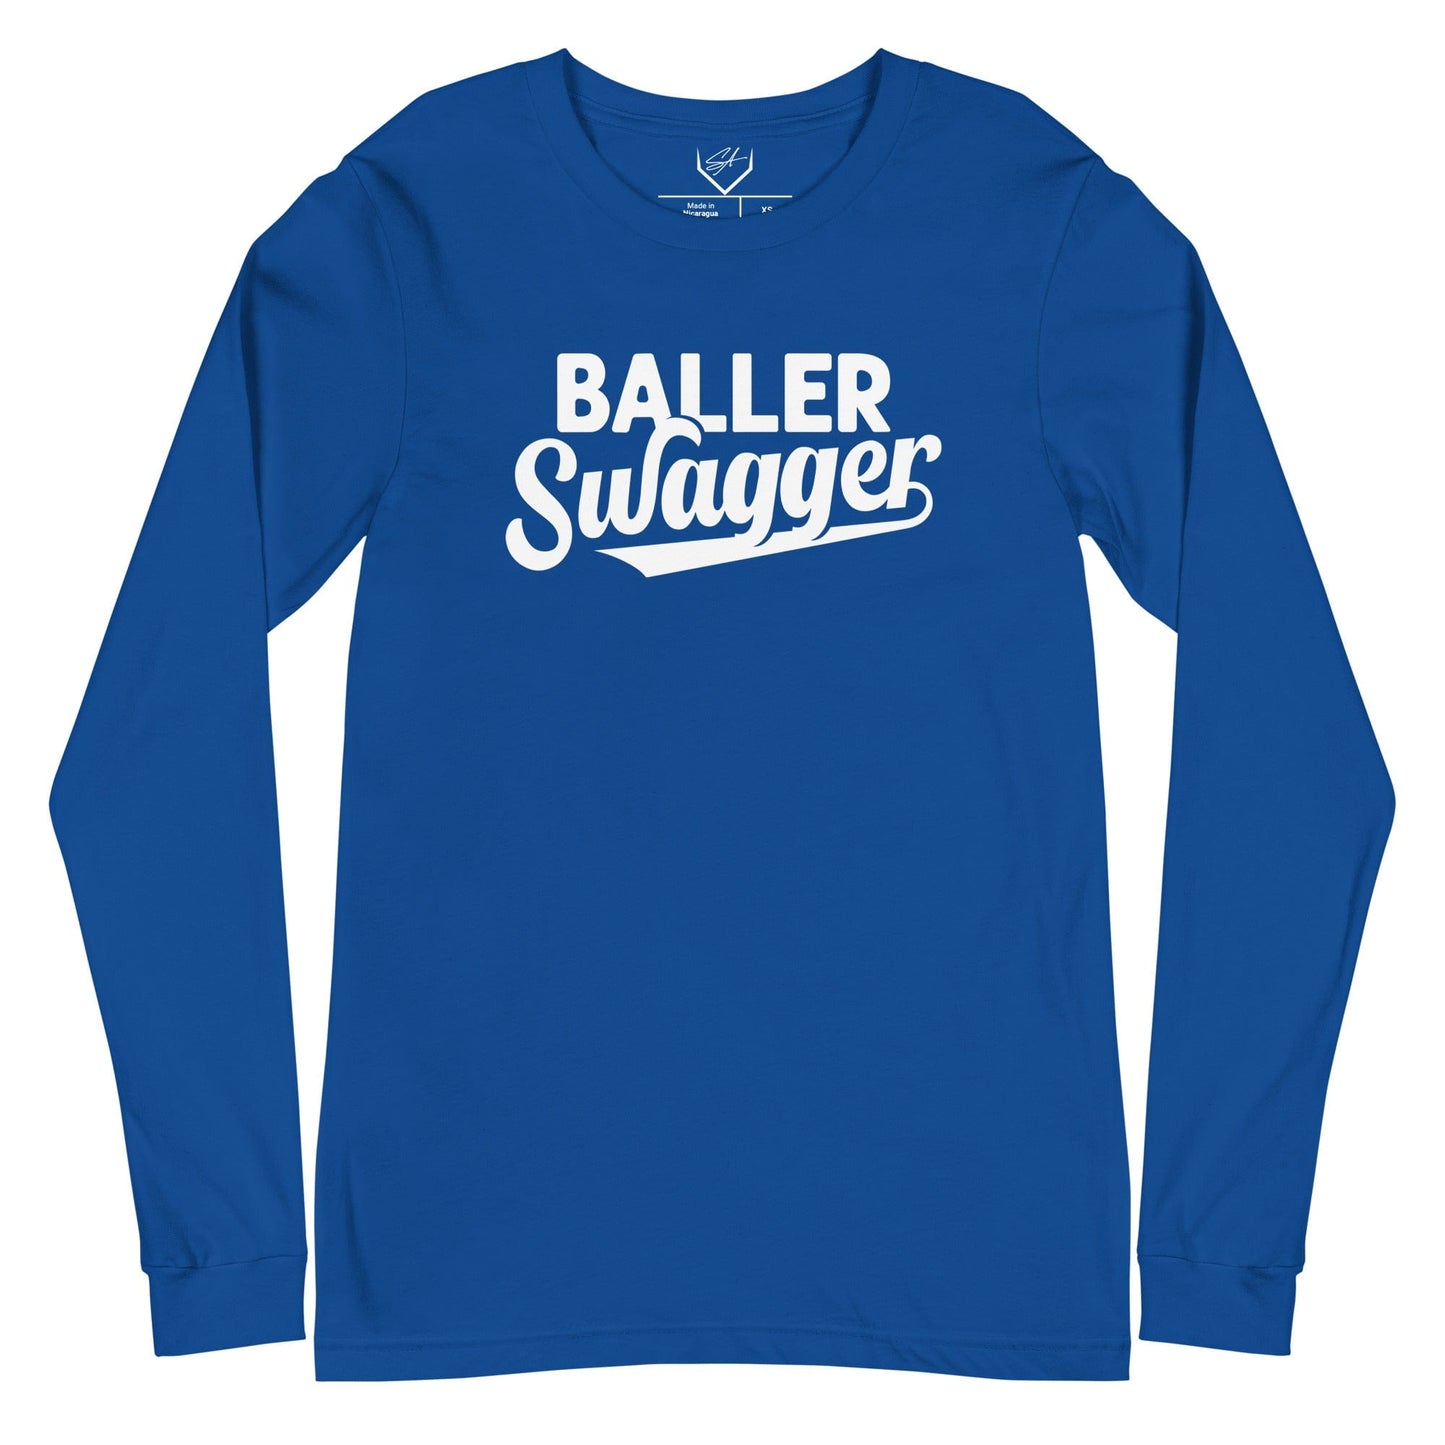 Baller Swagger - Adult Long Sleeve